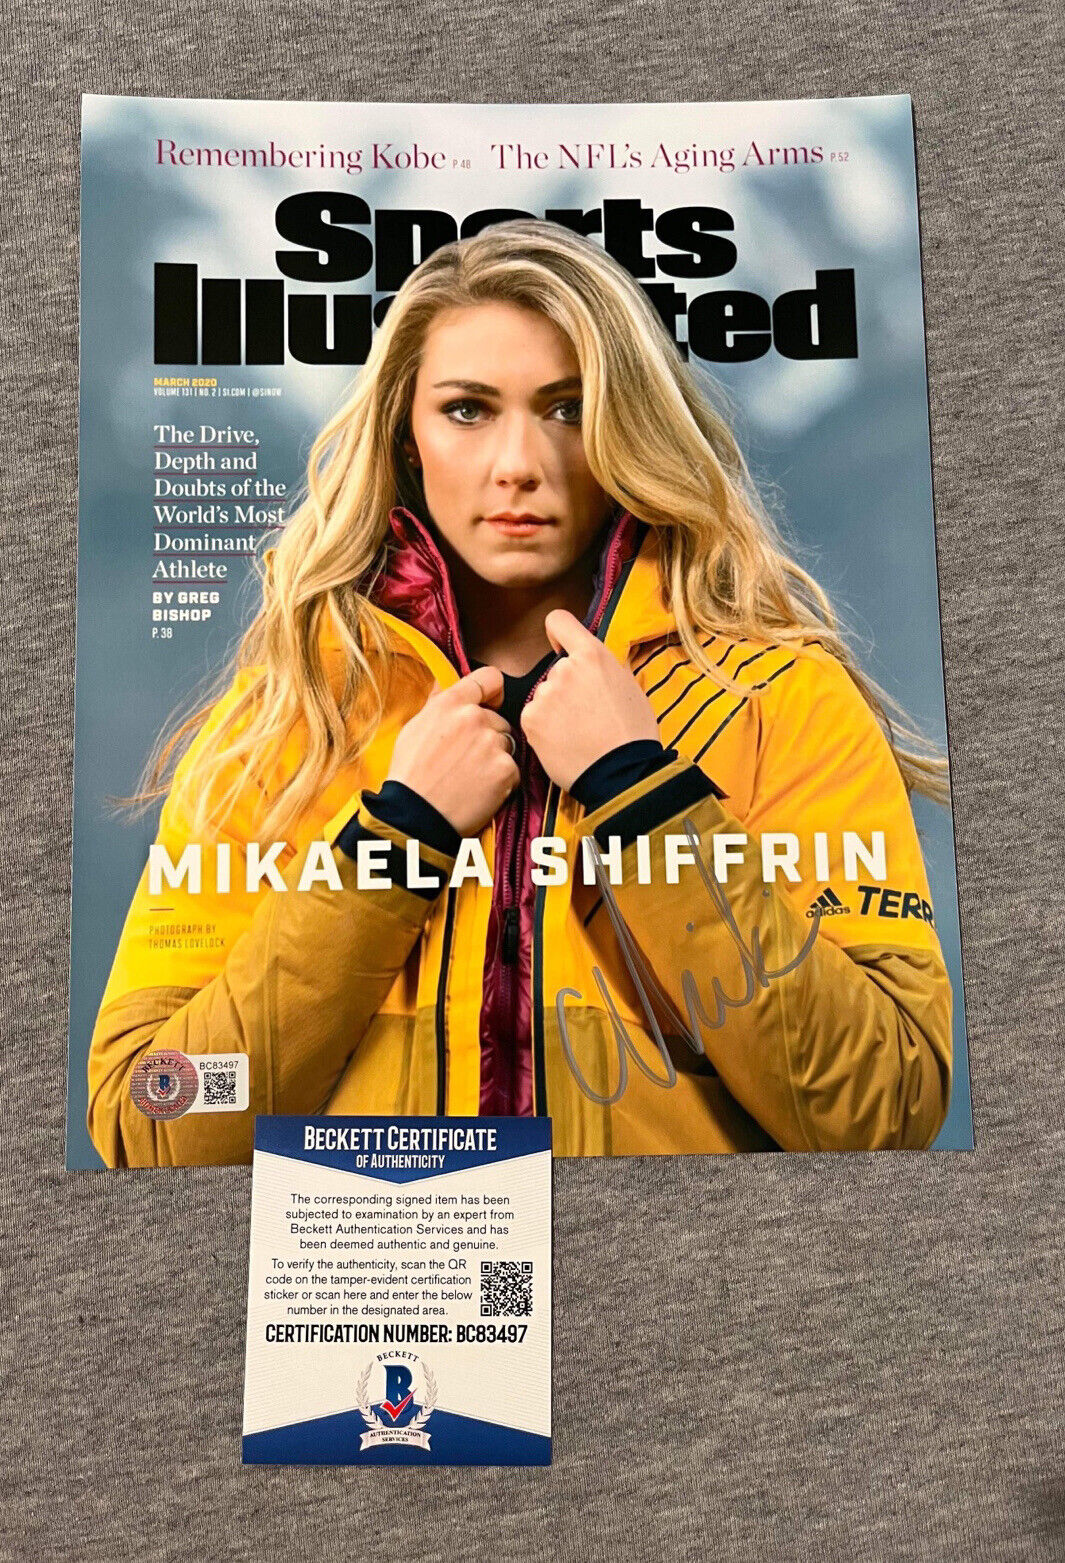 MIKAELA Max 83% OFF SHIFFRIN AUTOGRAPH 8x10 Very popular SPORTS COVER ILLUSTRATRED PHOTO